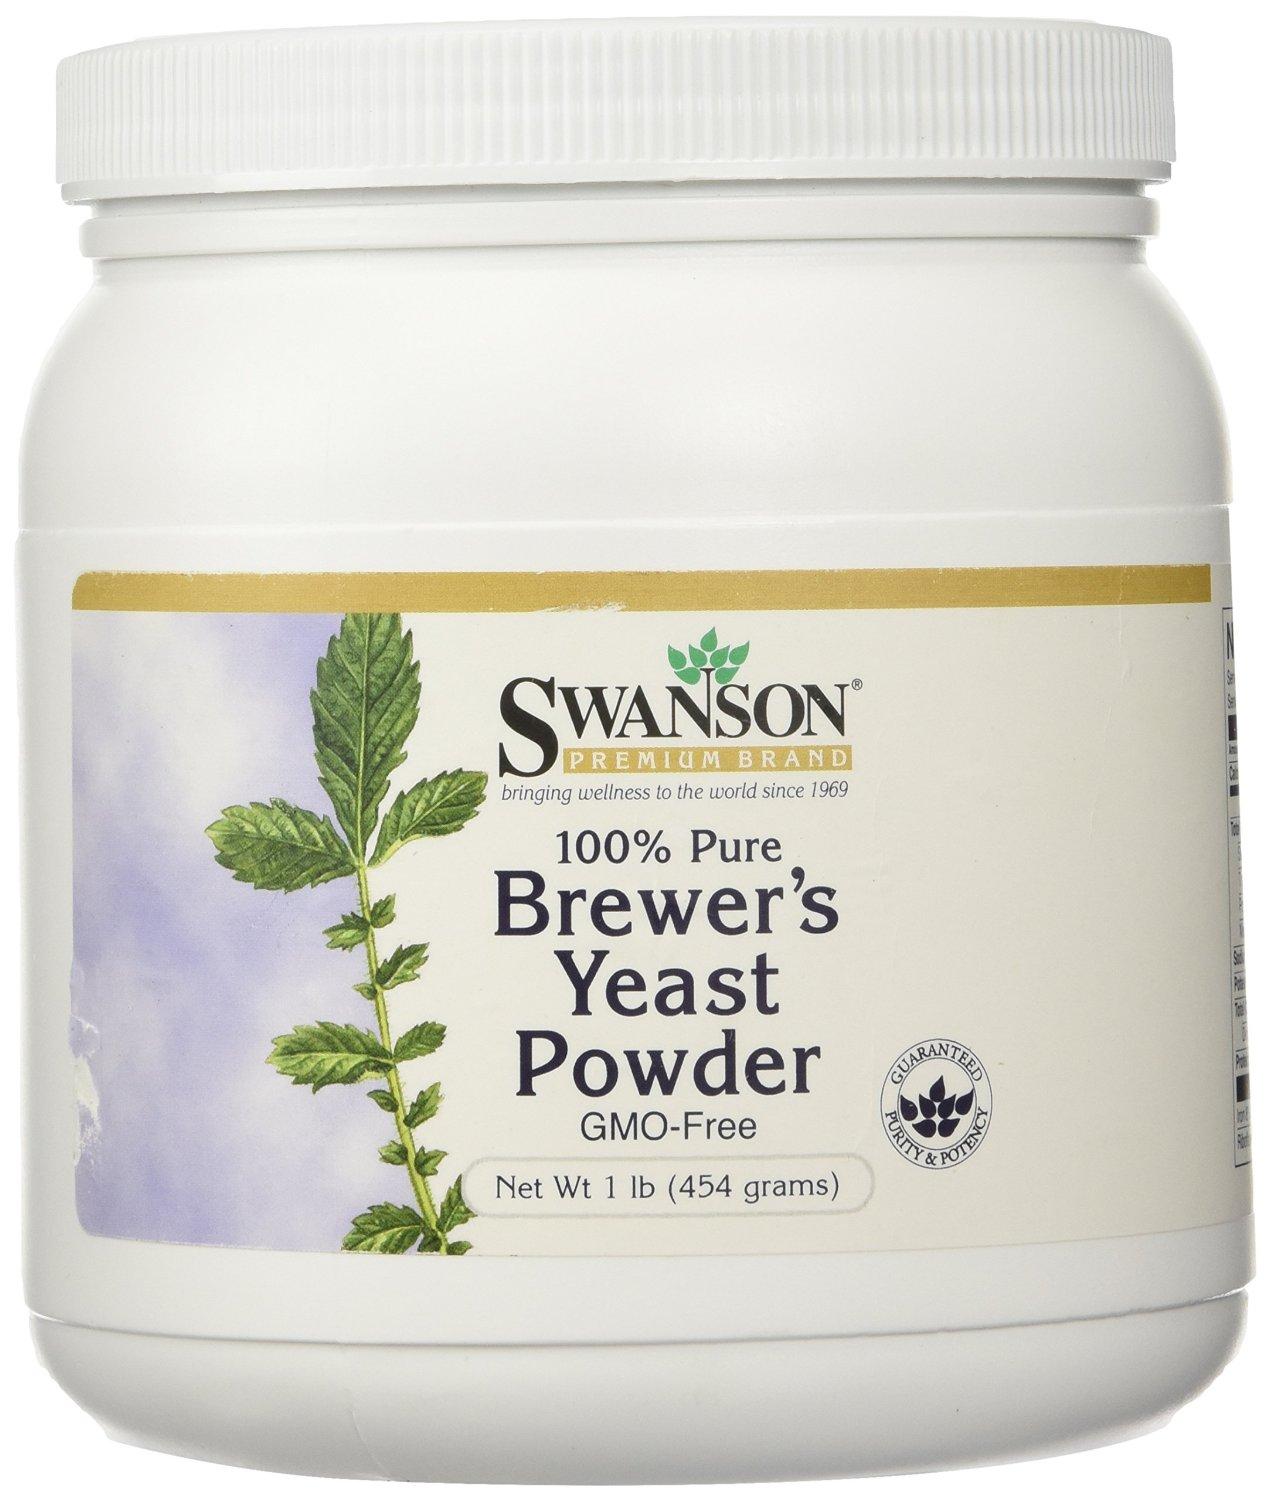 100% Pure Brewer's Yeast Powder Gmo-Free 16 oz (454 grams) Pwdr